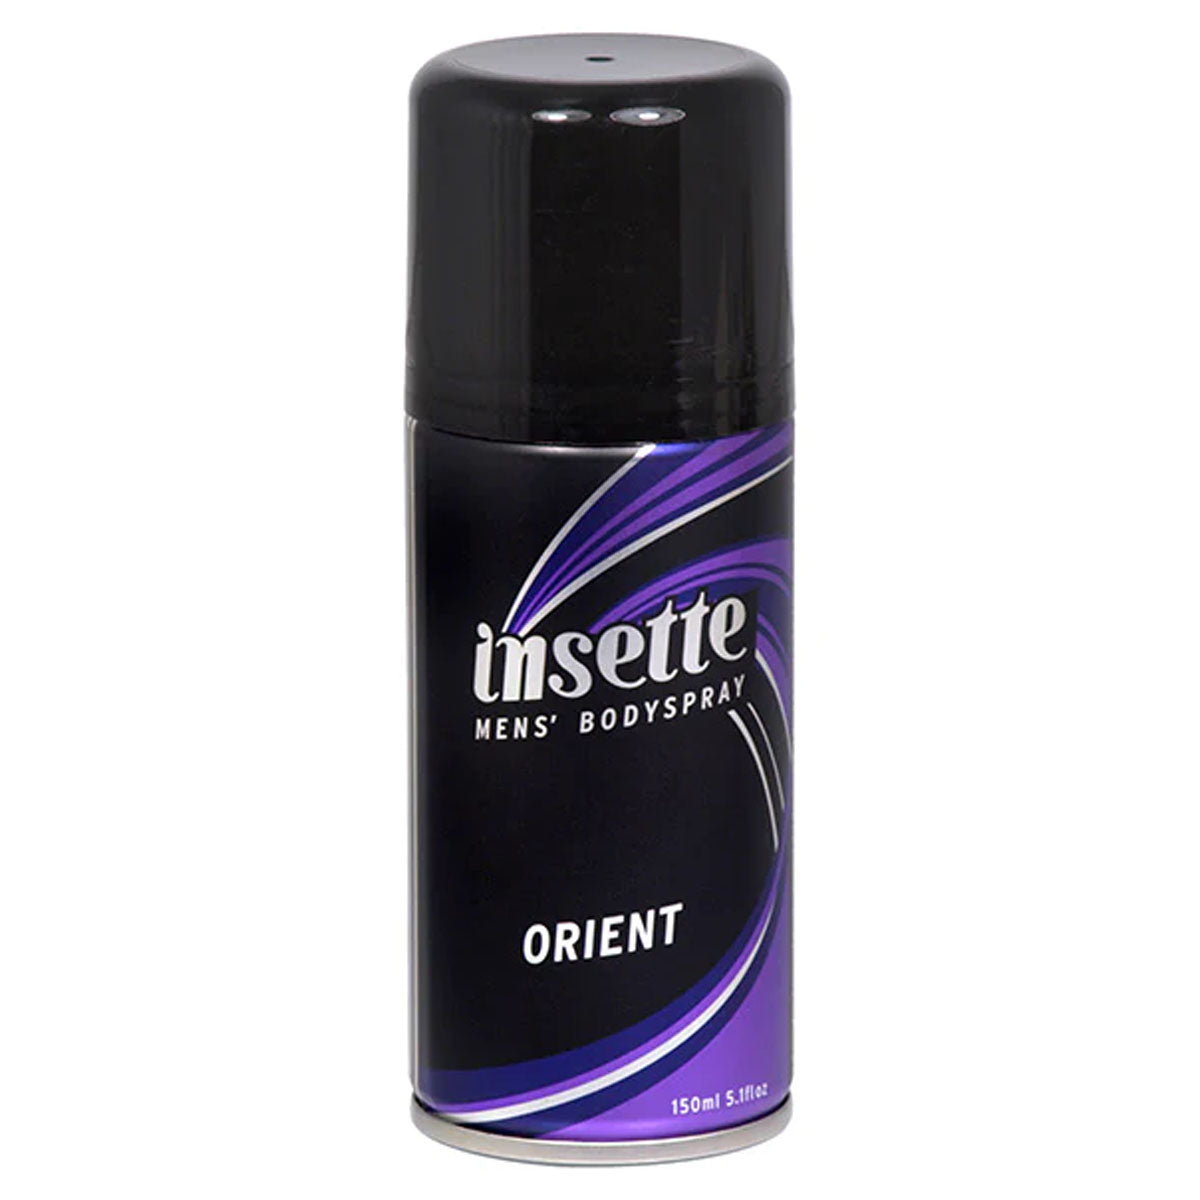 Insette - Men's Deodorant Body Spray Orient - 150ml - Continental Food Store